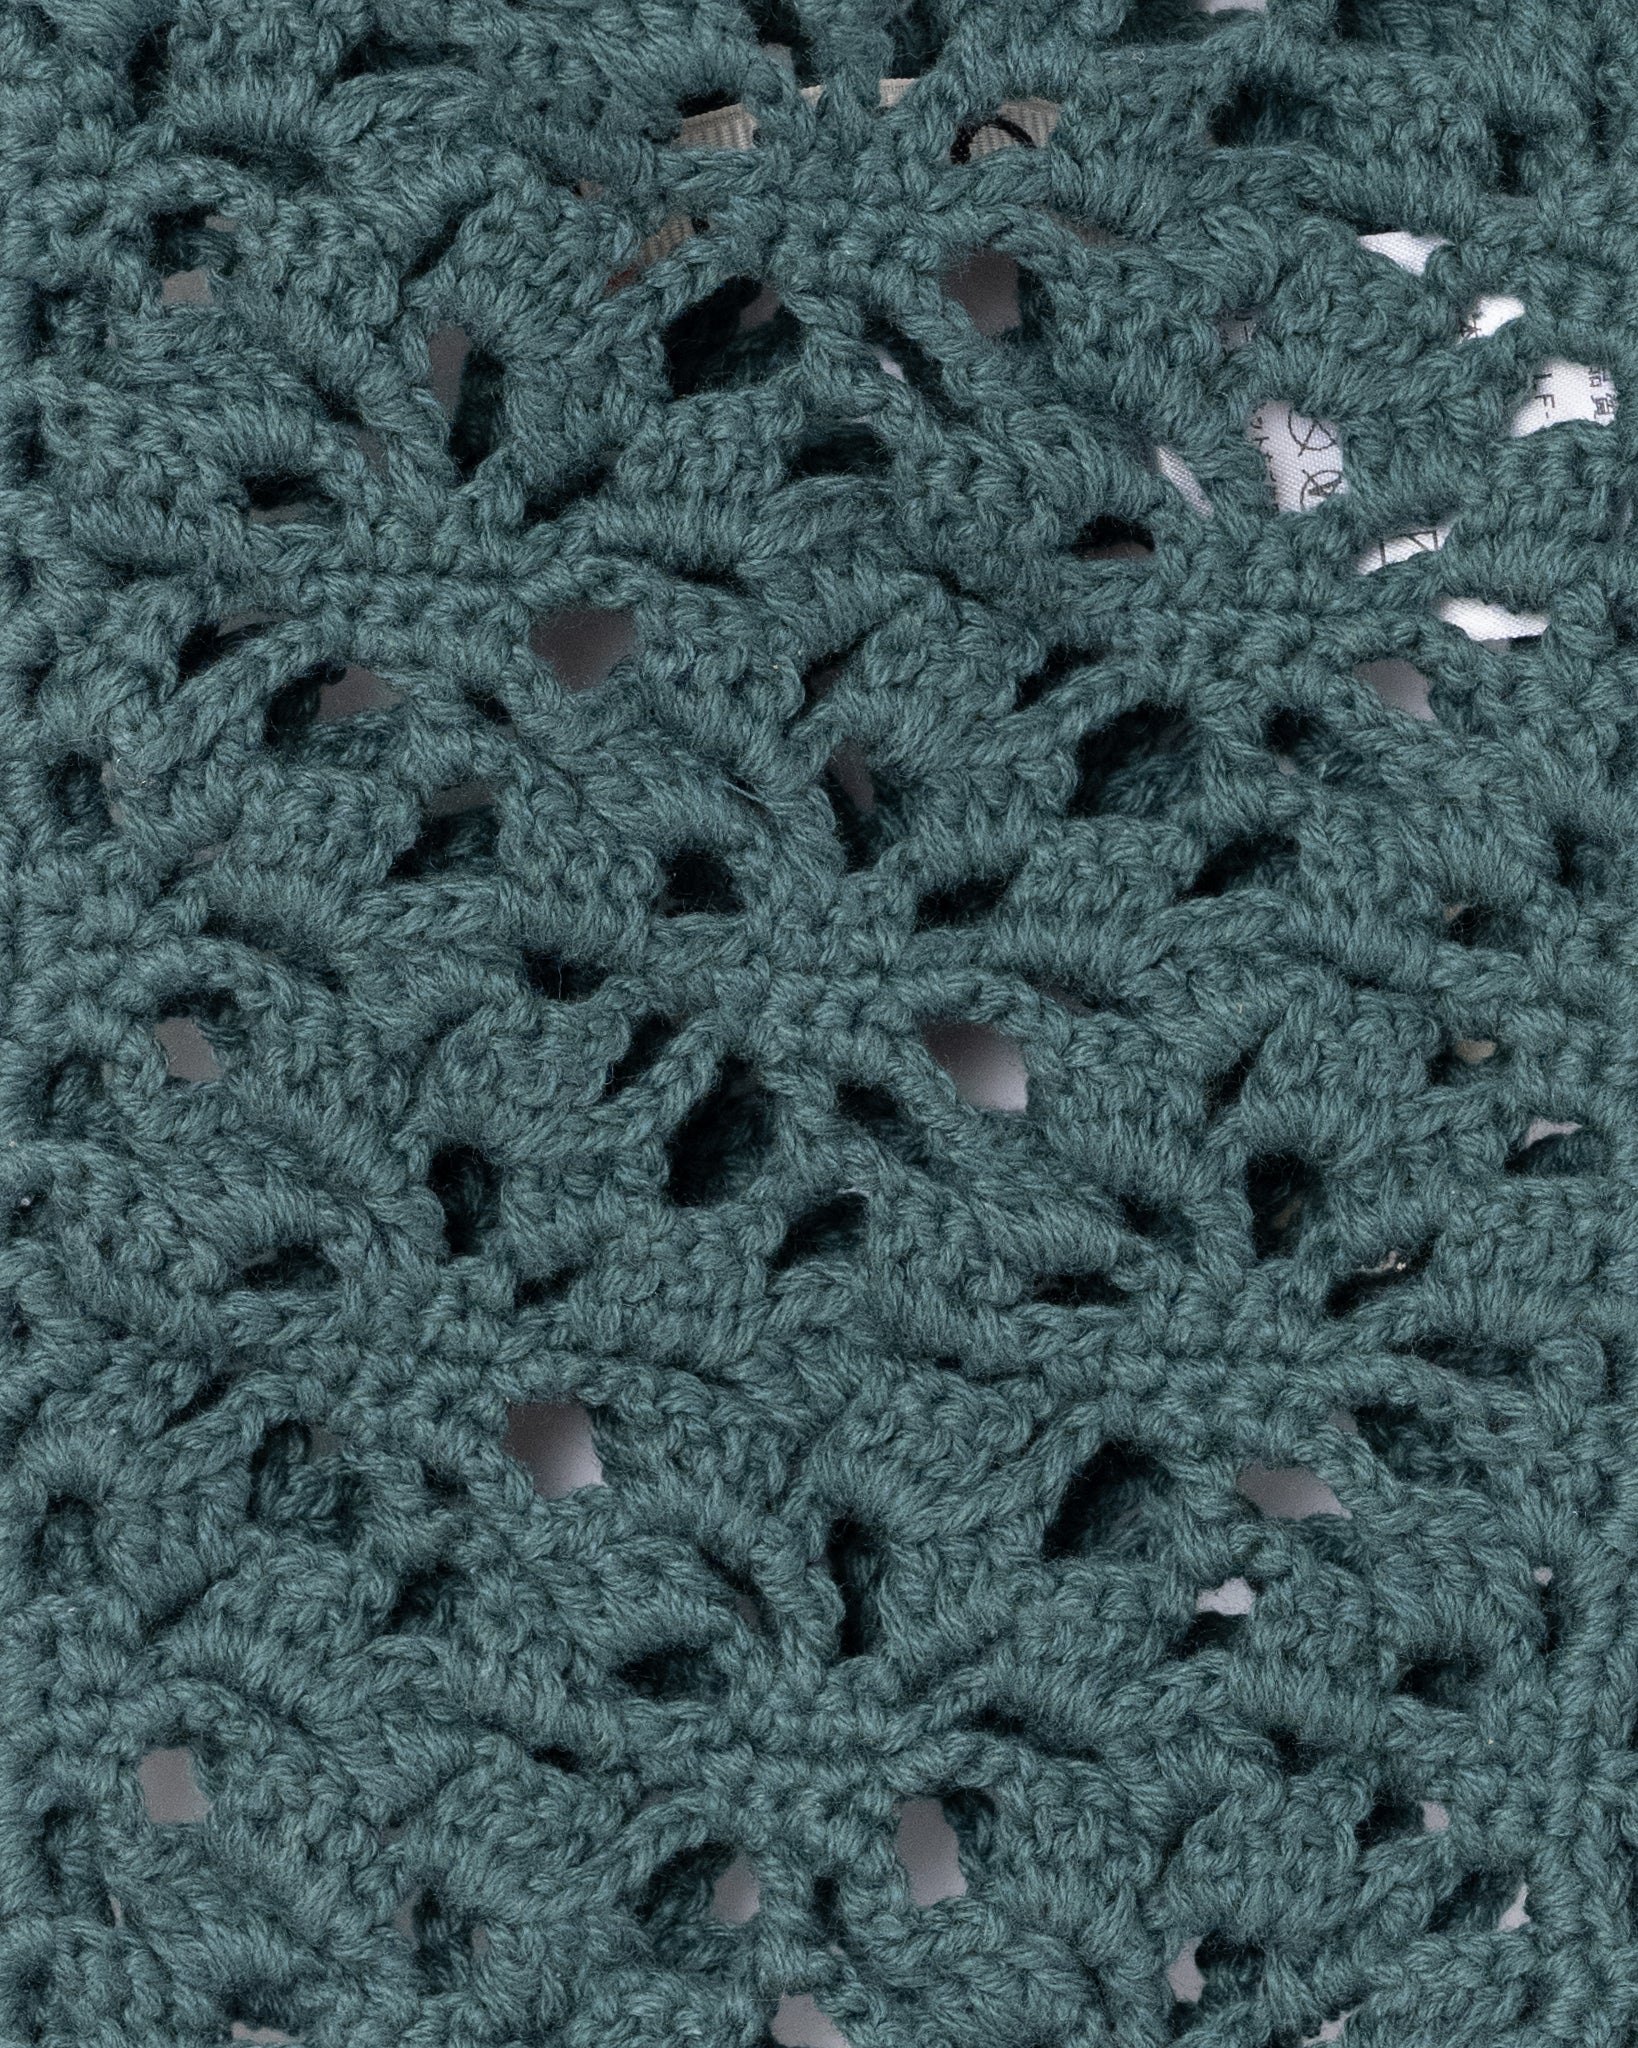 Crochet Hand Knit Mini Bag -Green